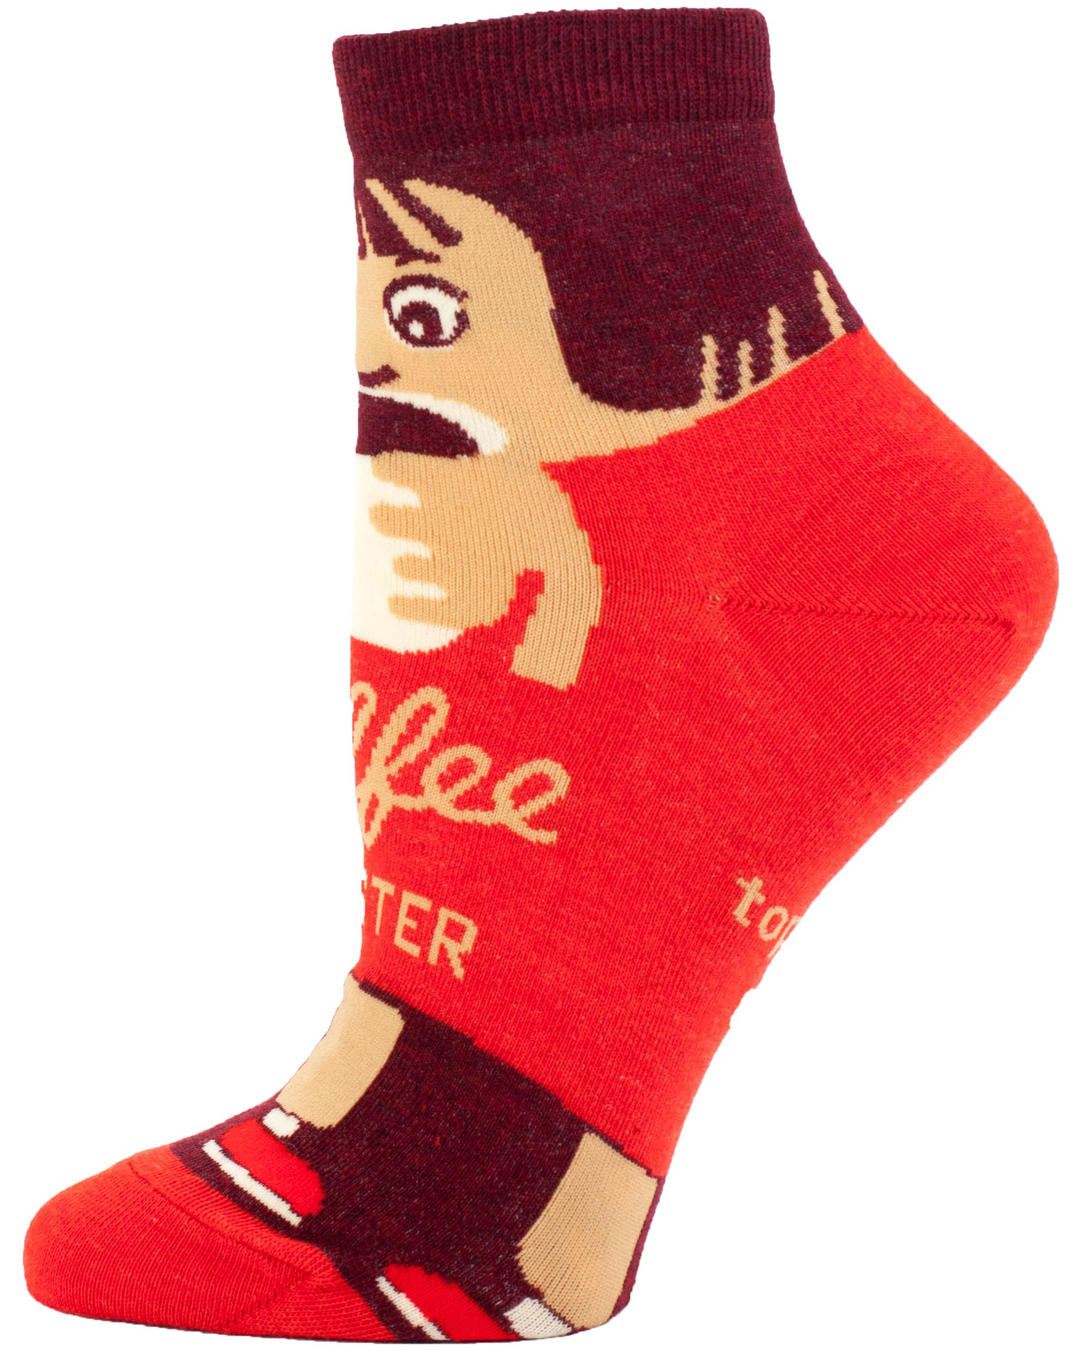 Coffee Monster Women's Ankle Socks - Kingfisher Road - Online Boutique